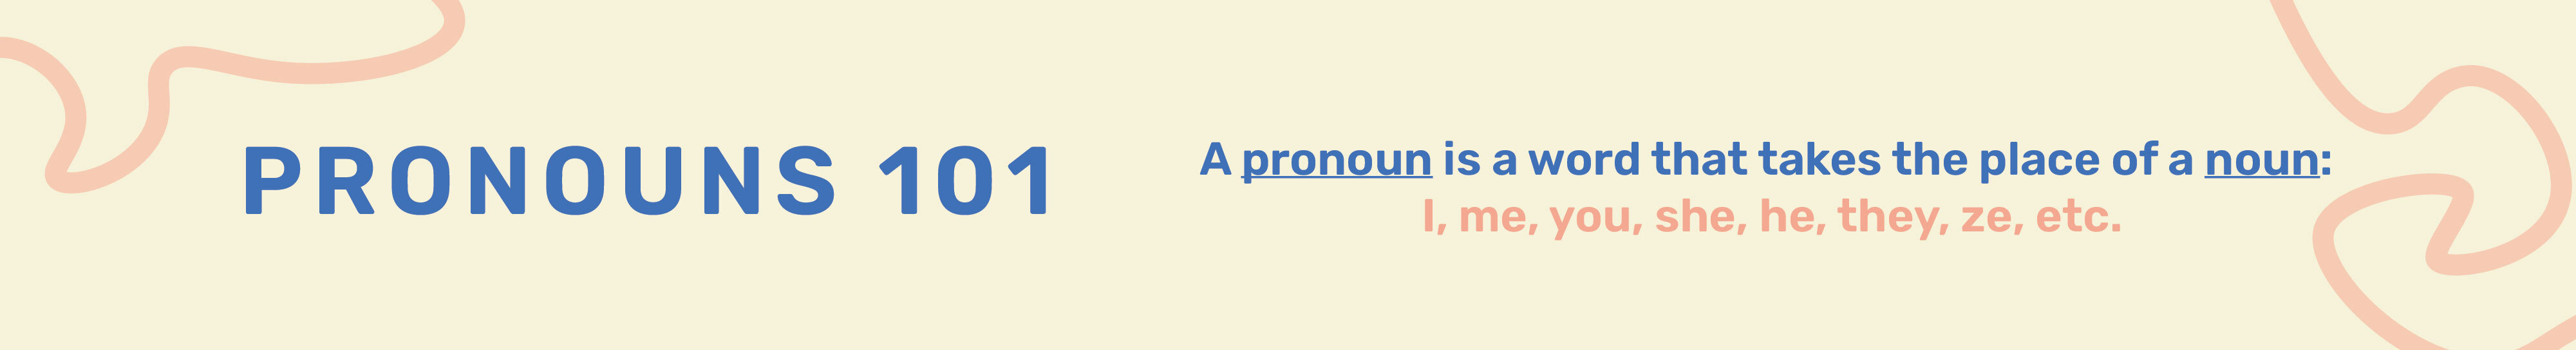 Pronoun Resources